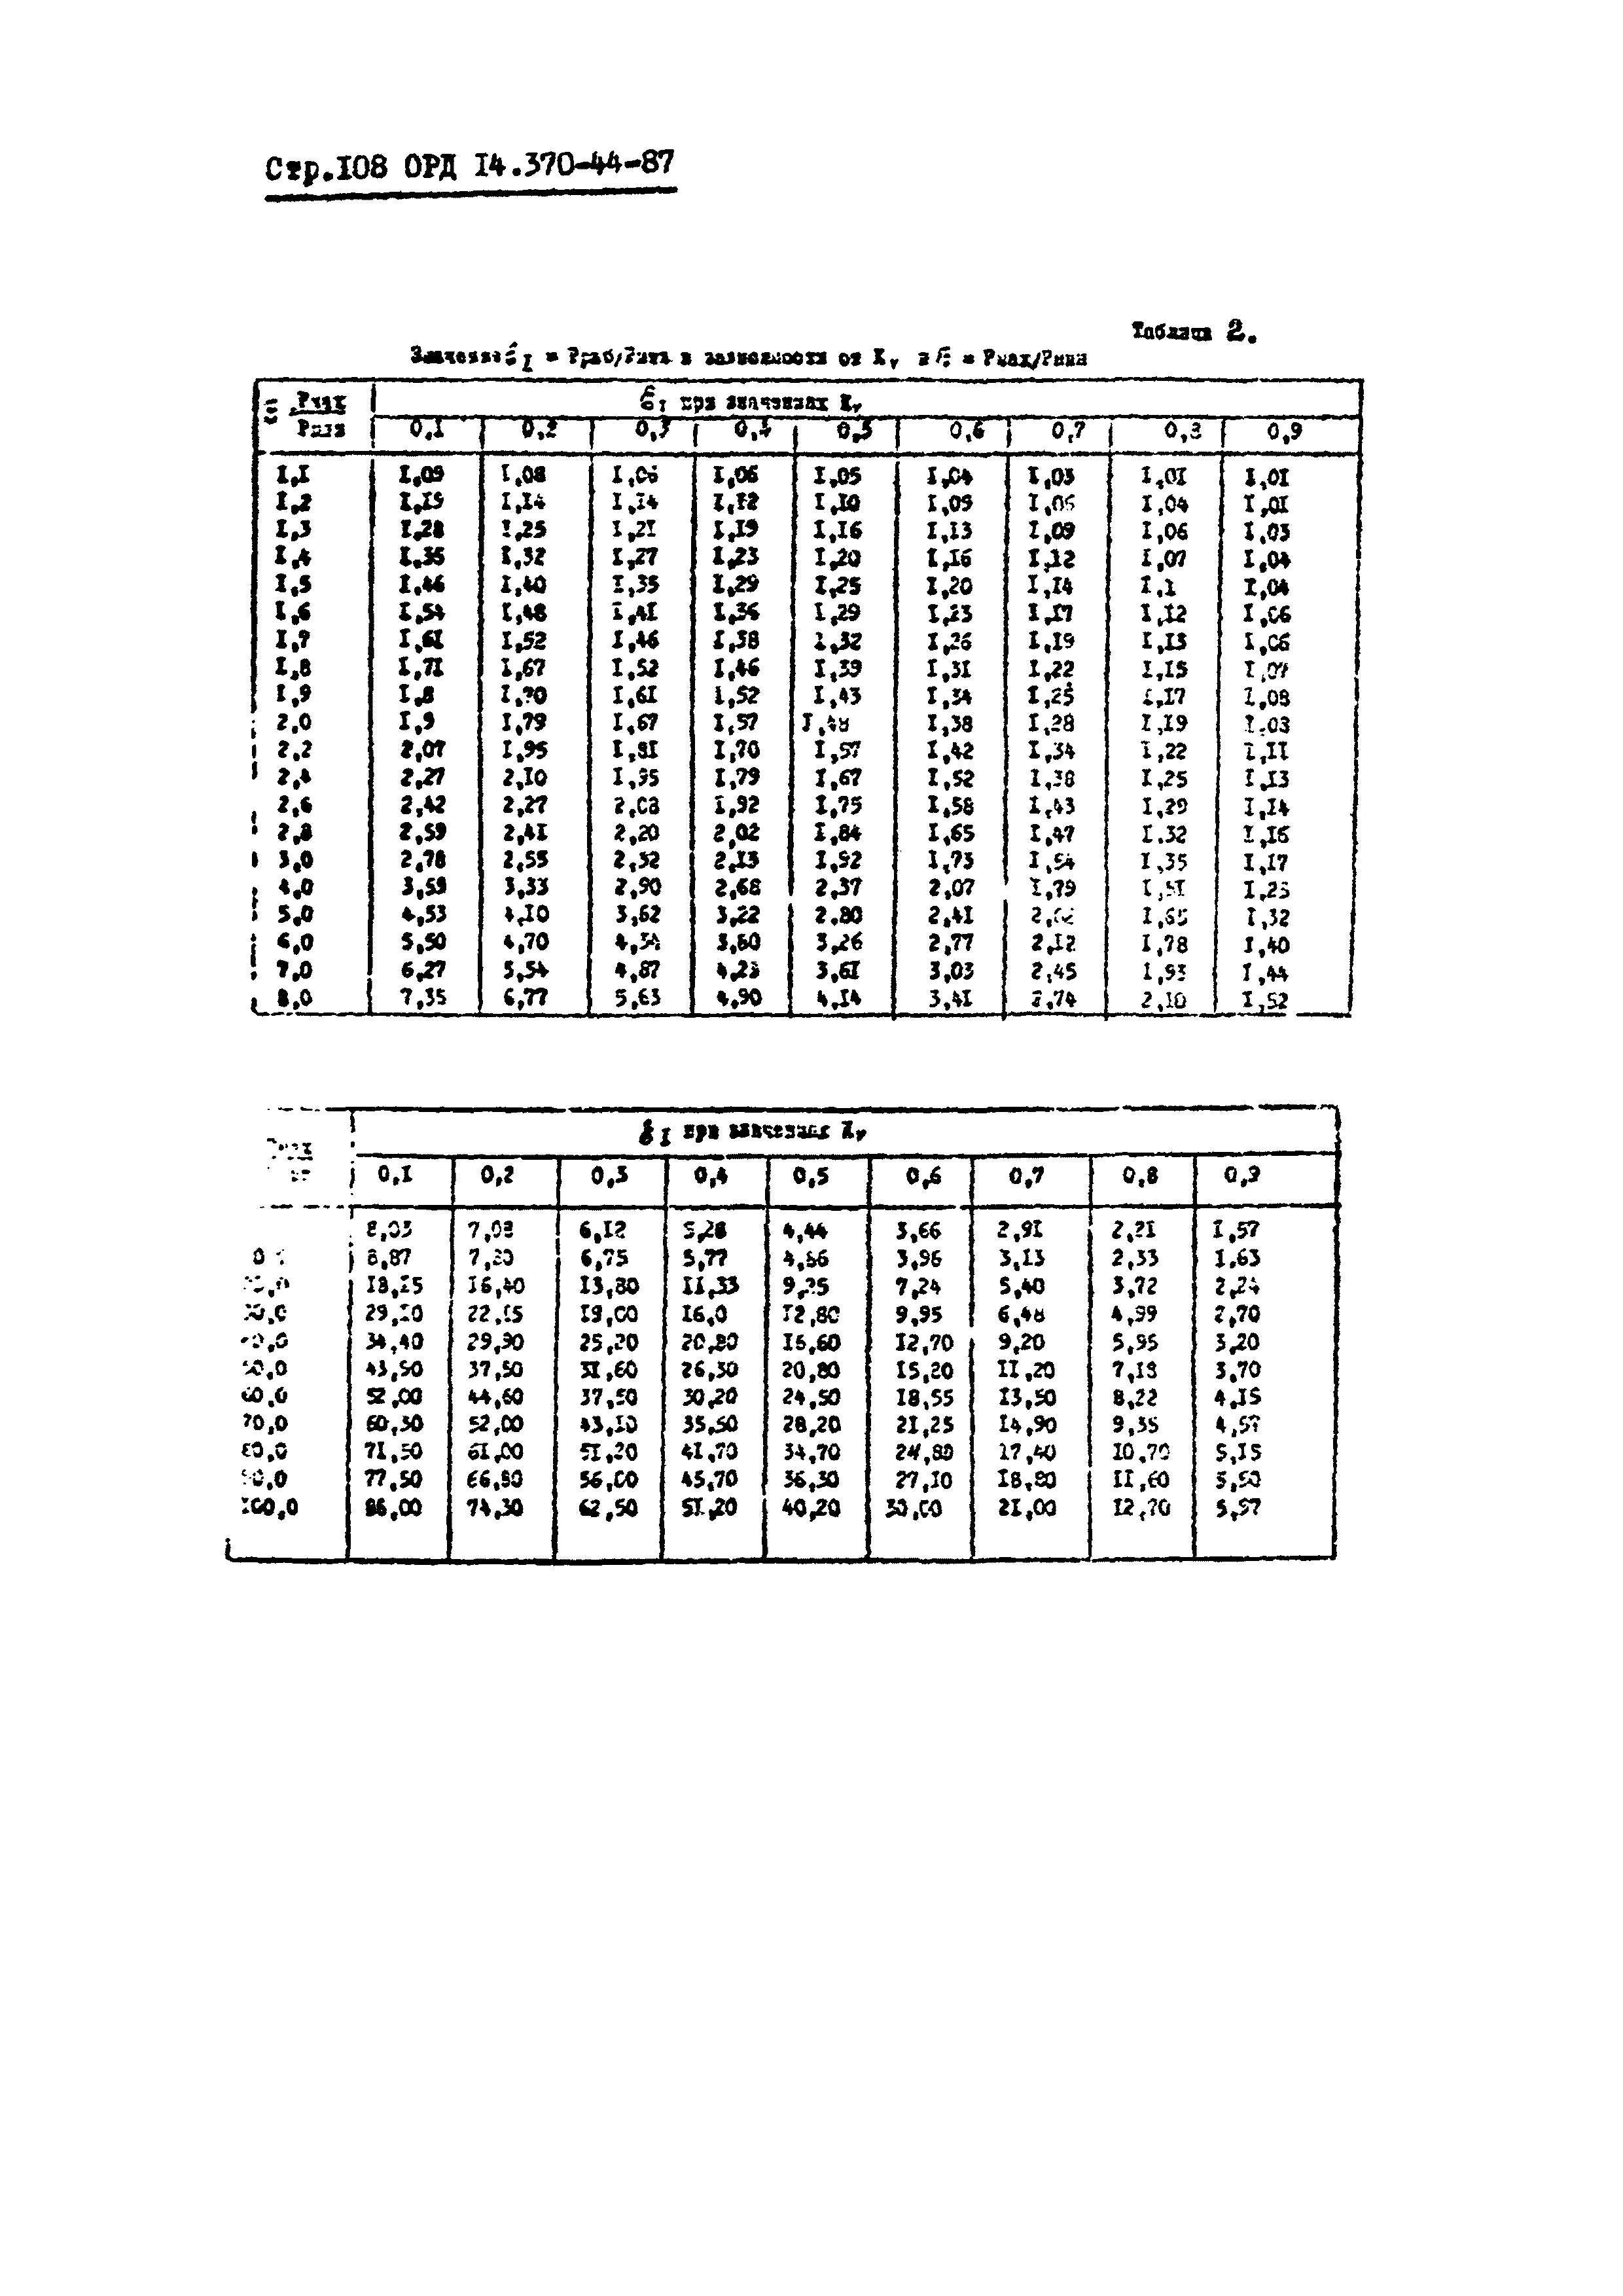 ОРД 14.370-44-87